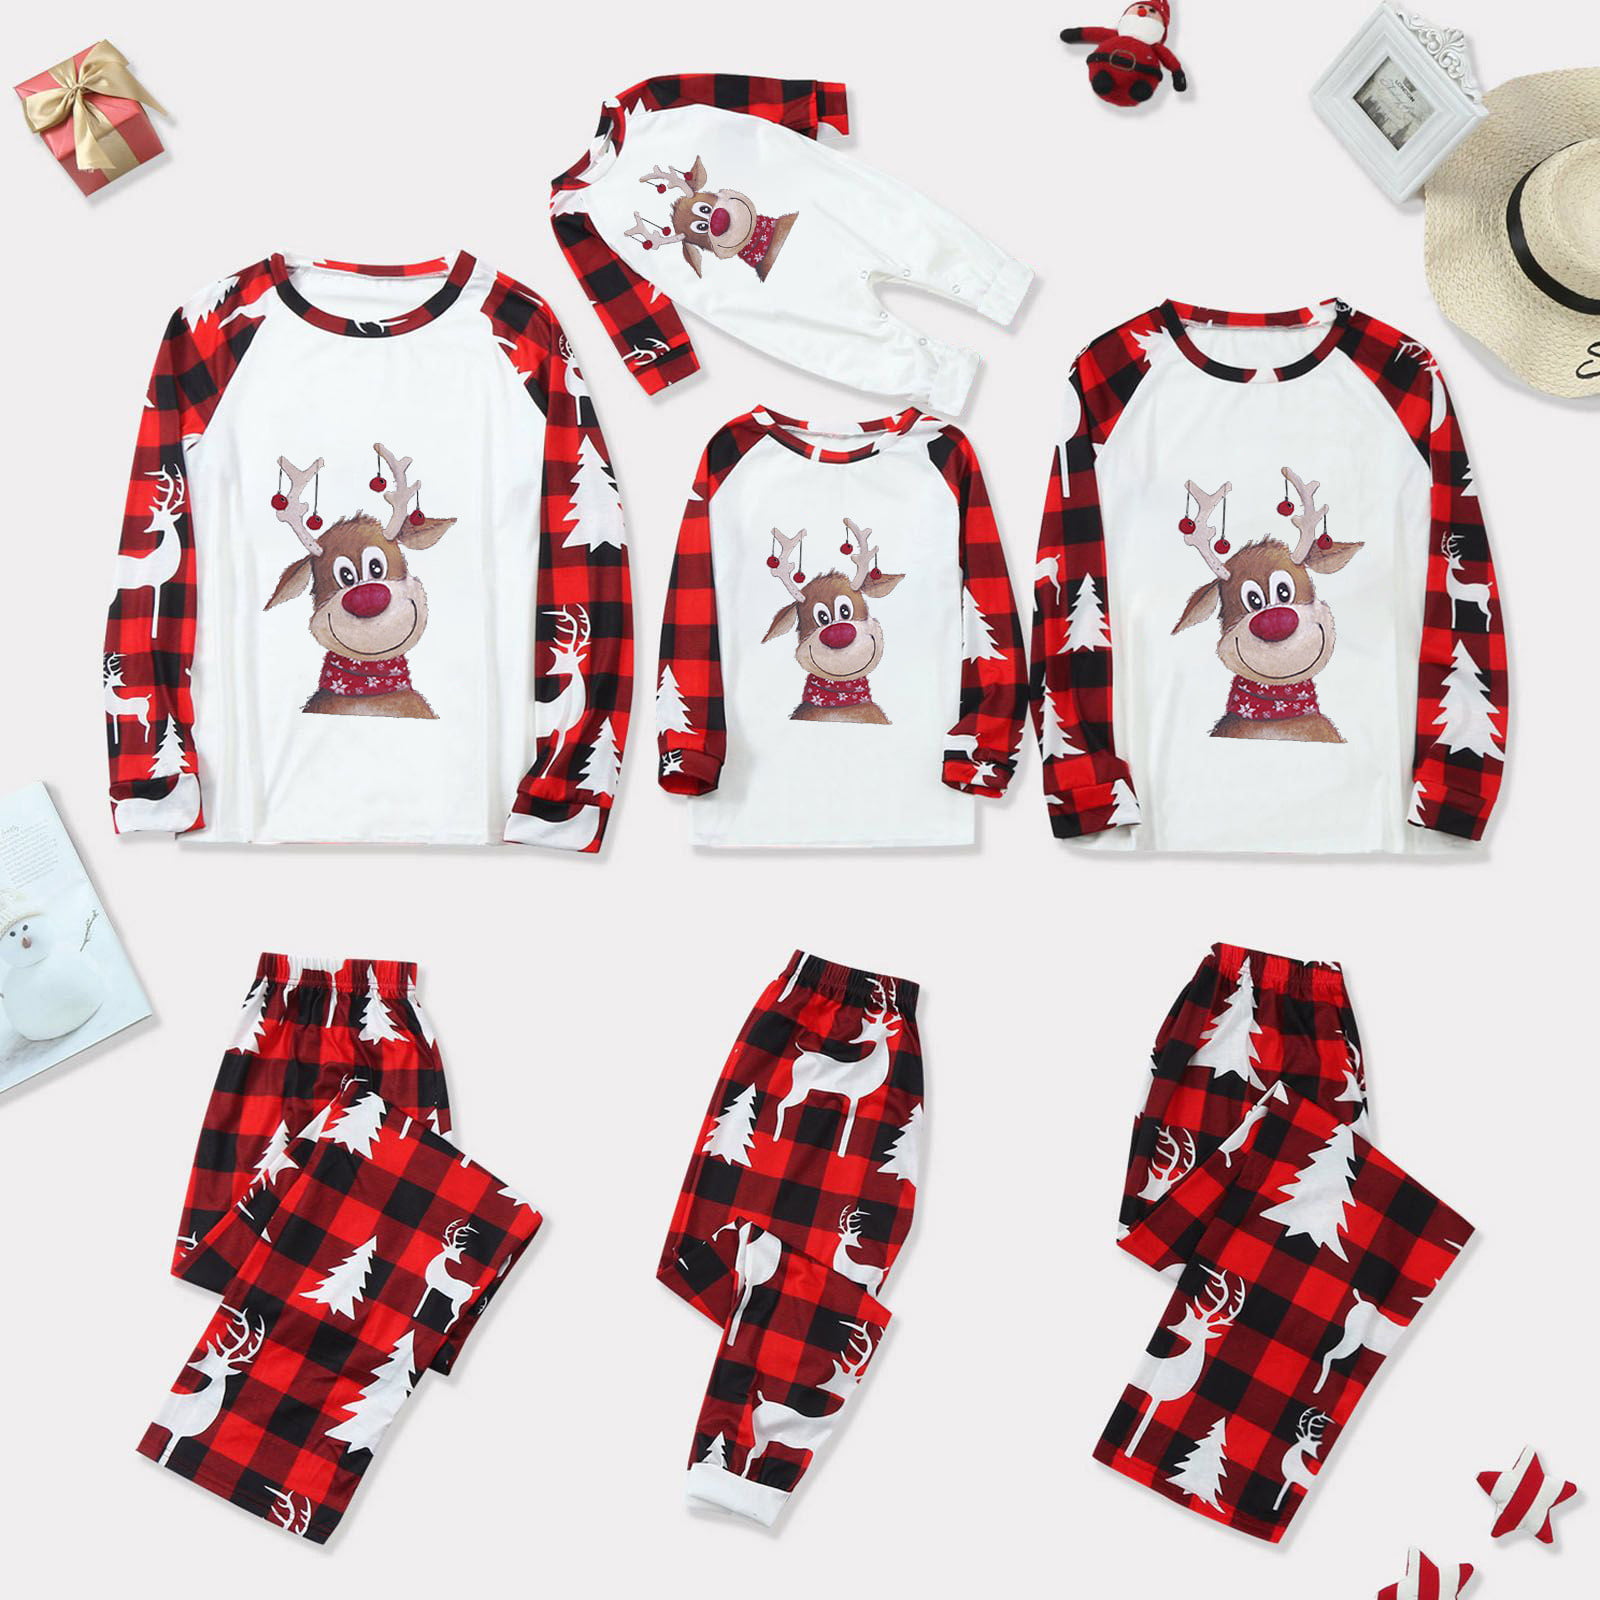  Matching Family Pajamas Sets Christmas PJs Red